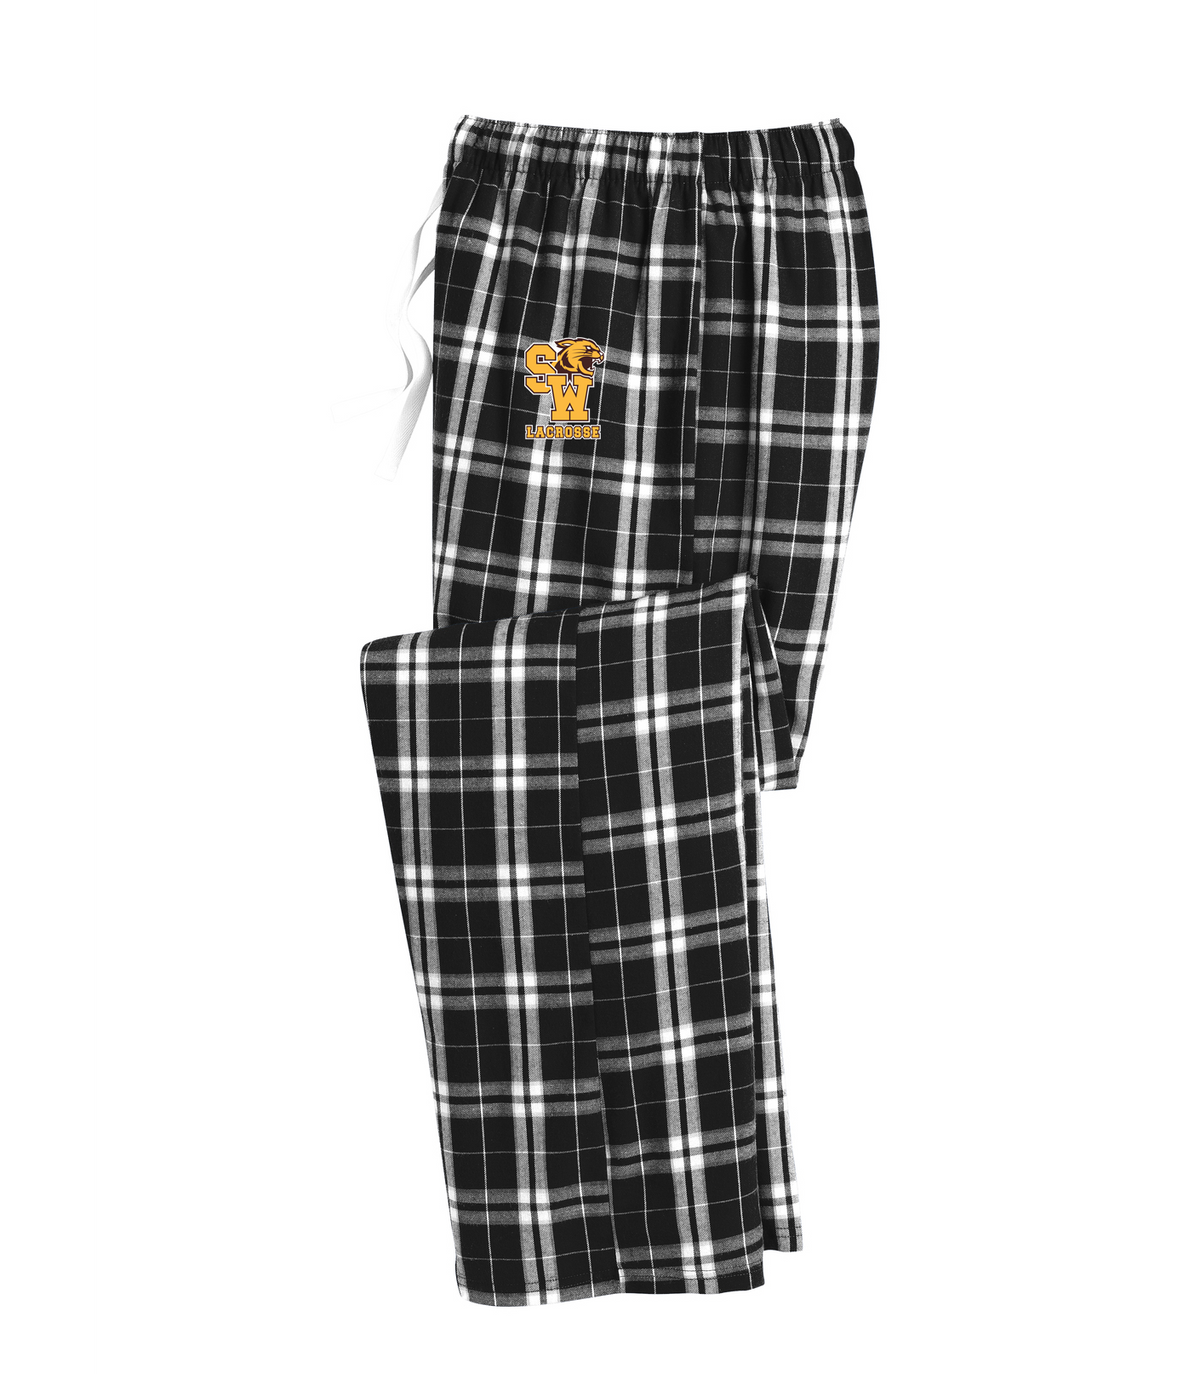 South Windsor Lacrosse Plaid Pajama Pants